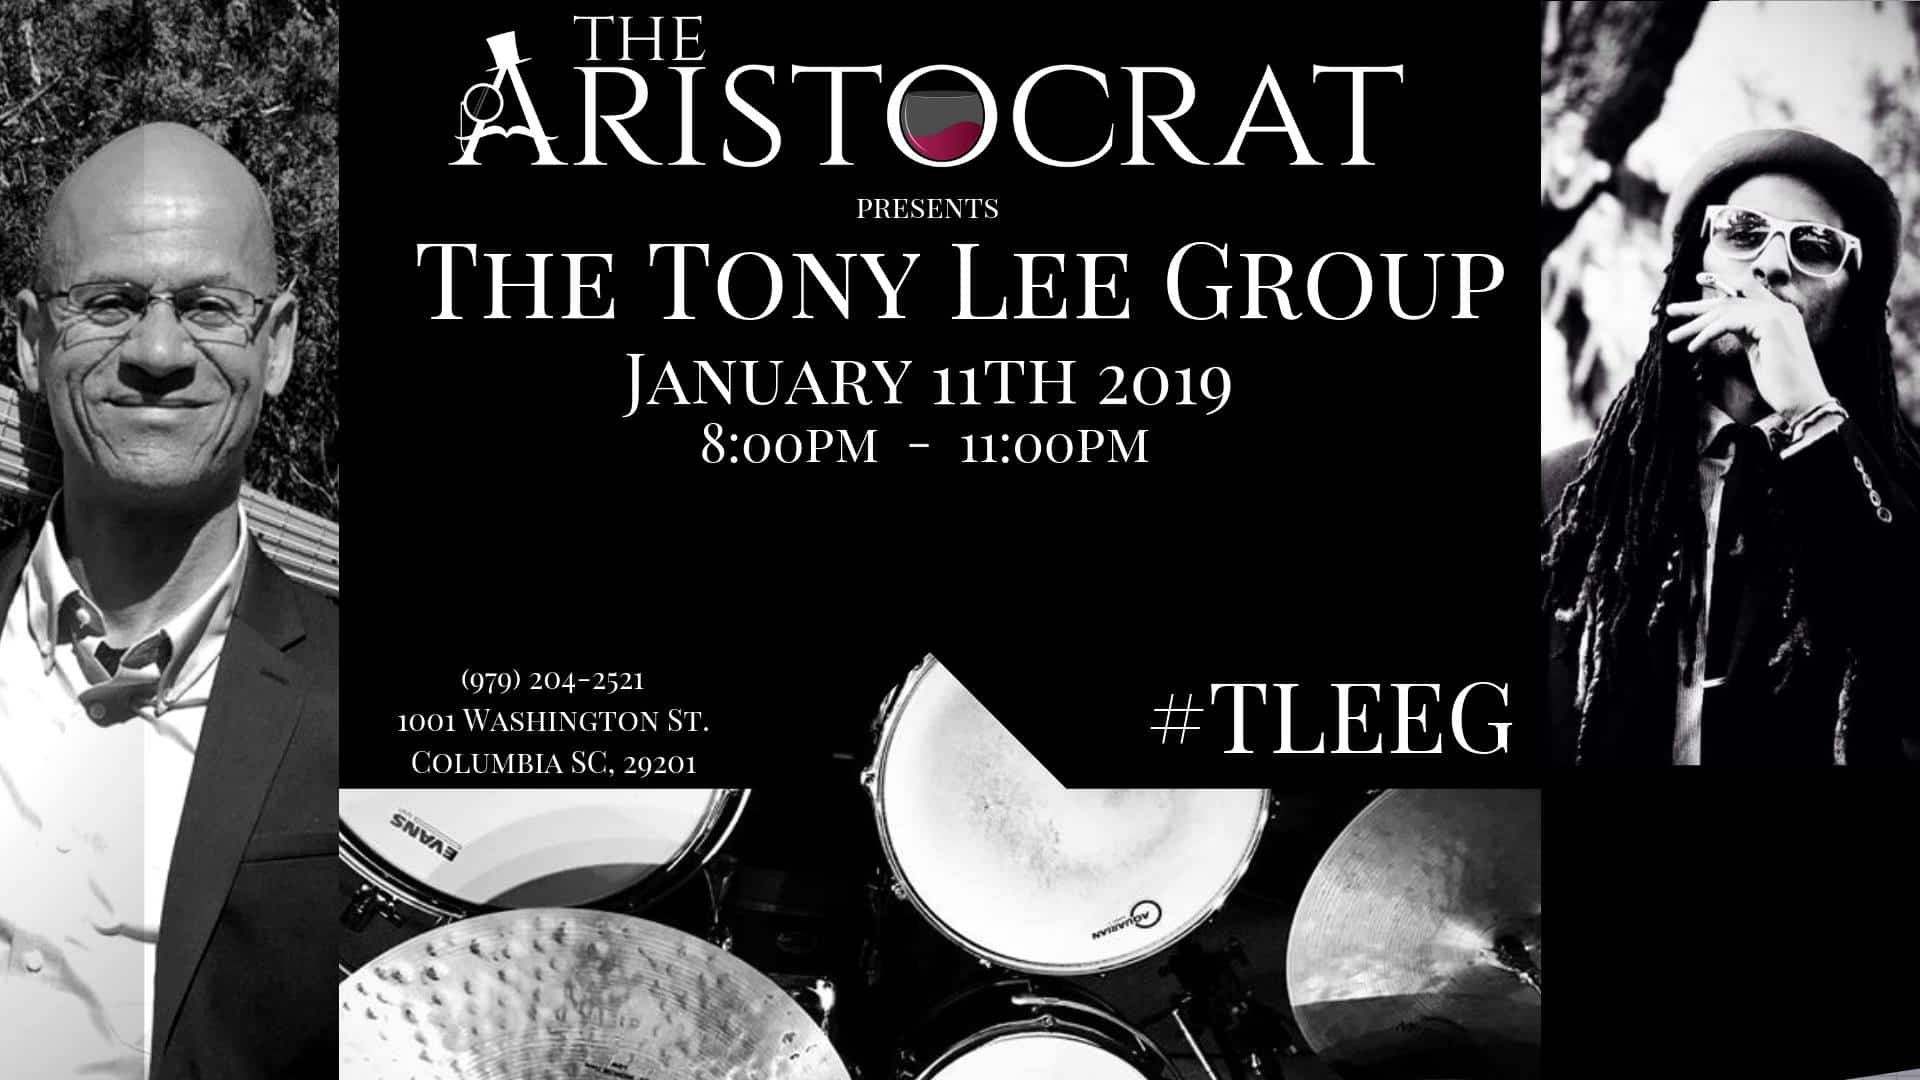 The Tony Lee Group